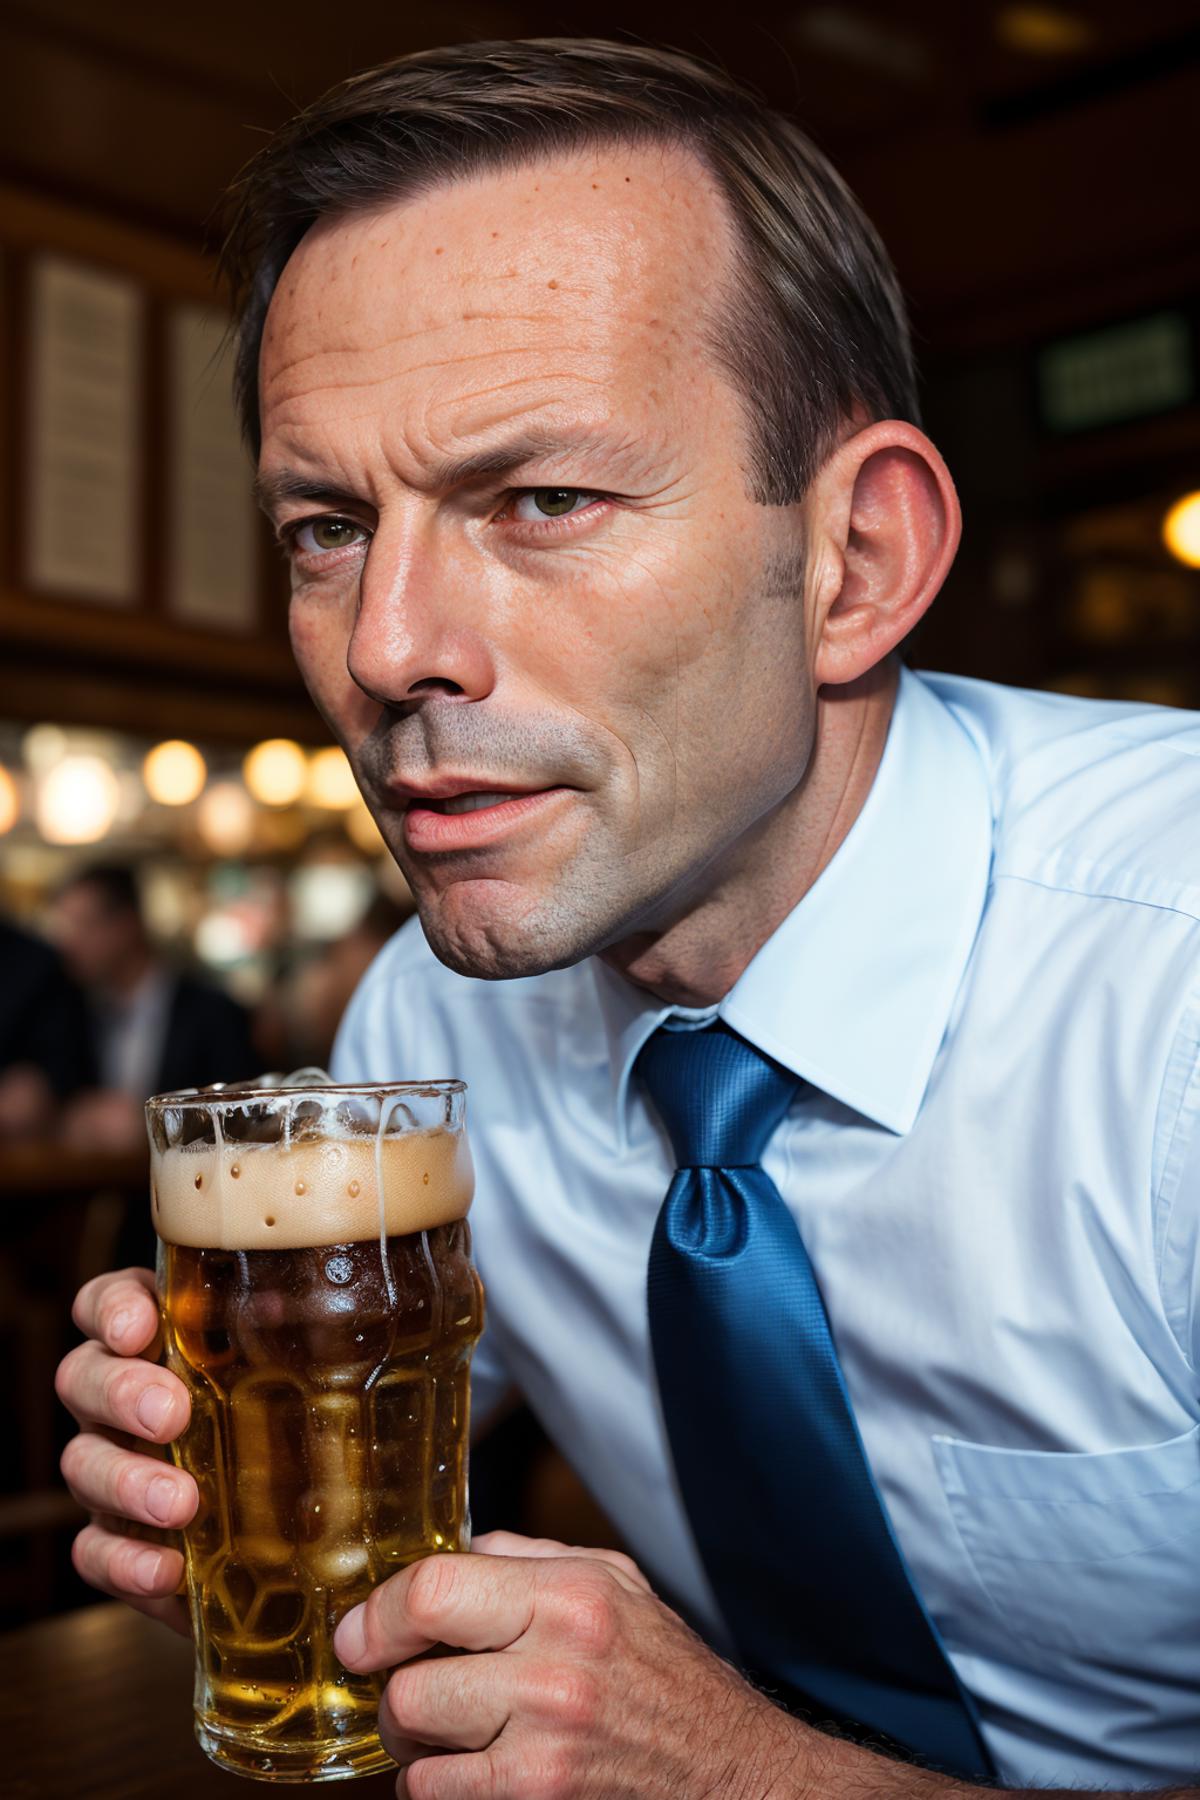 Tony Abbott, Eater of Onions image by PressWagon